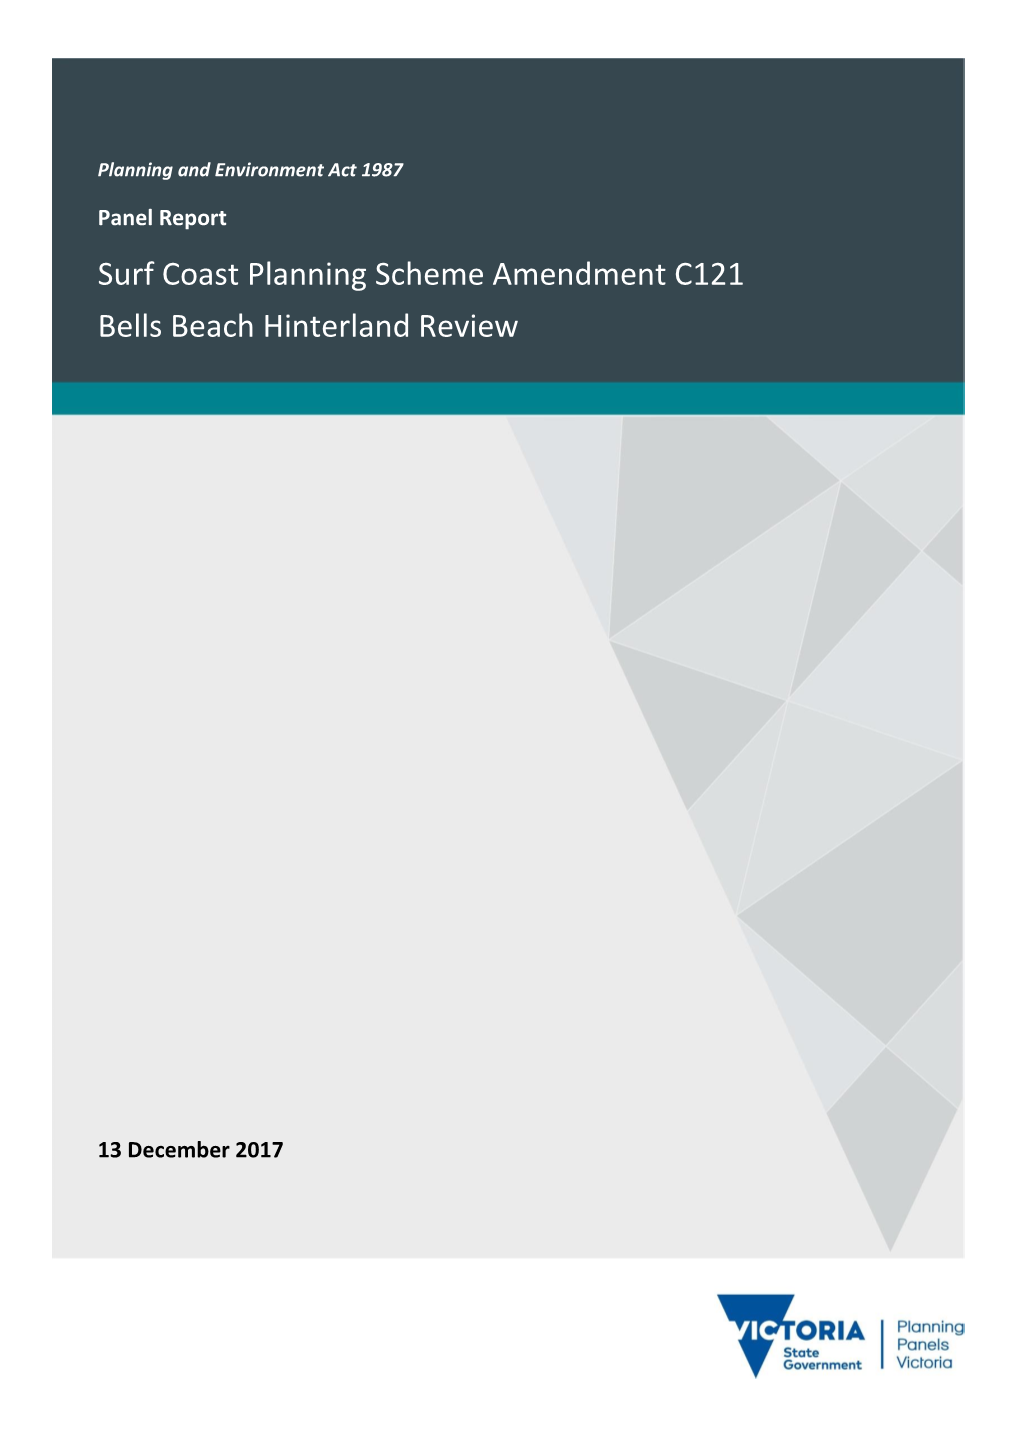 Surf Coast Planning Scheme Amendment C121 Bells Beach Hinterland Review